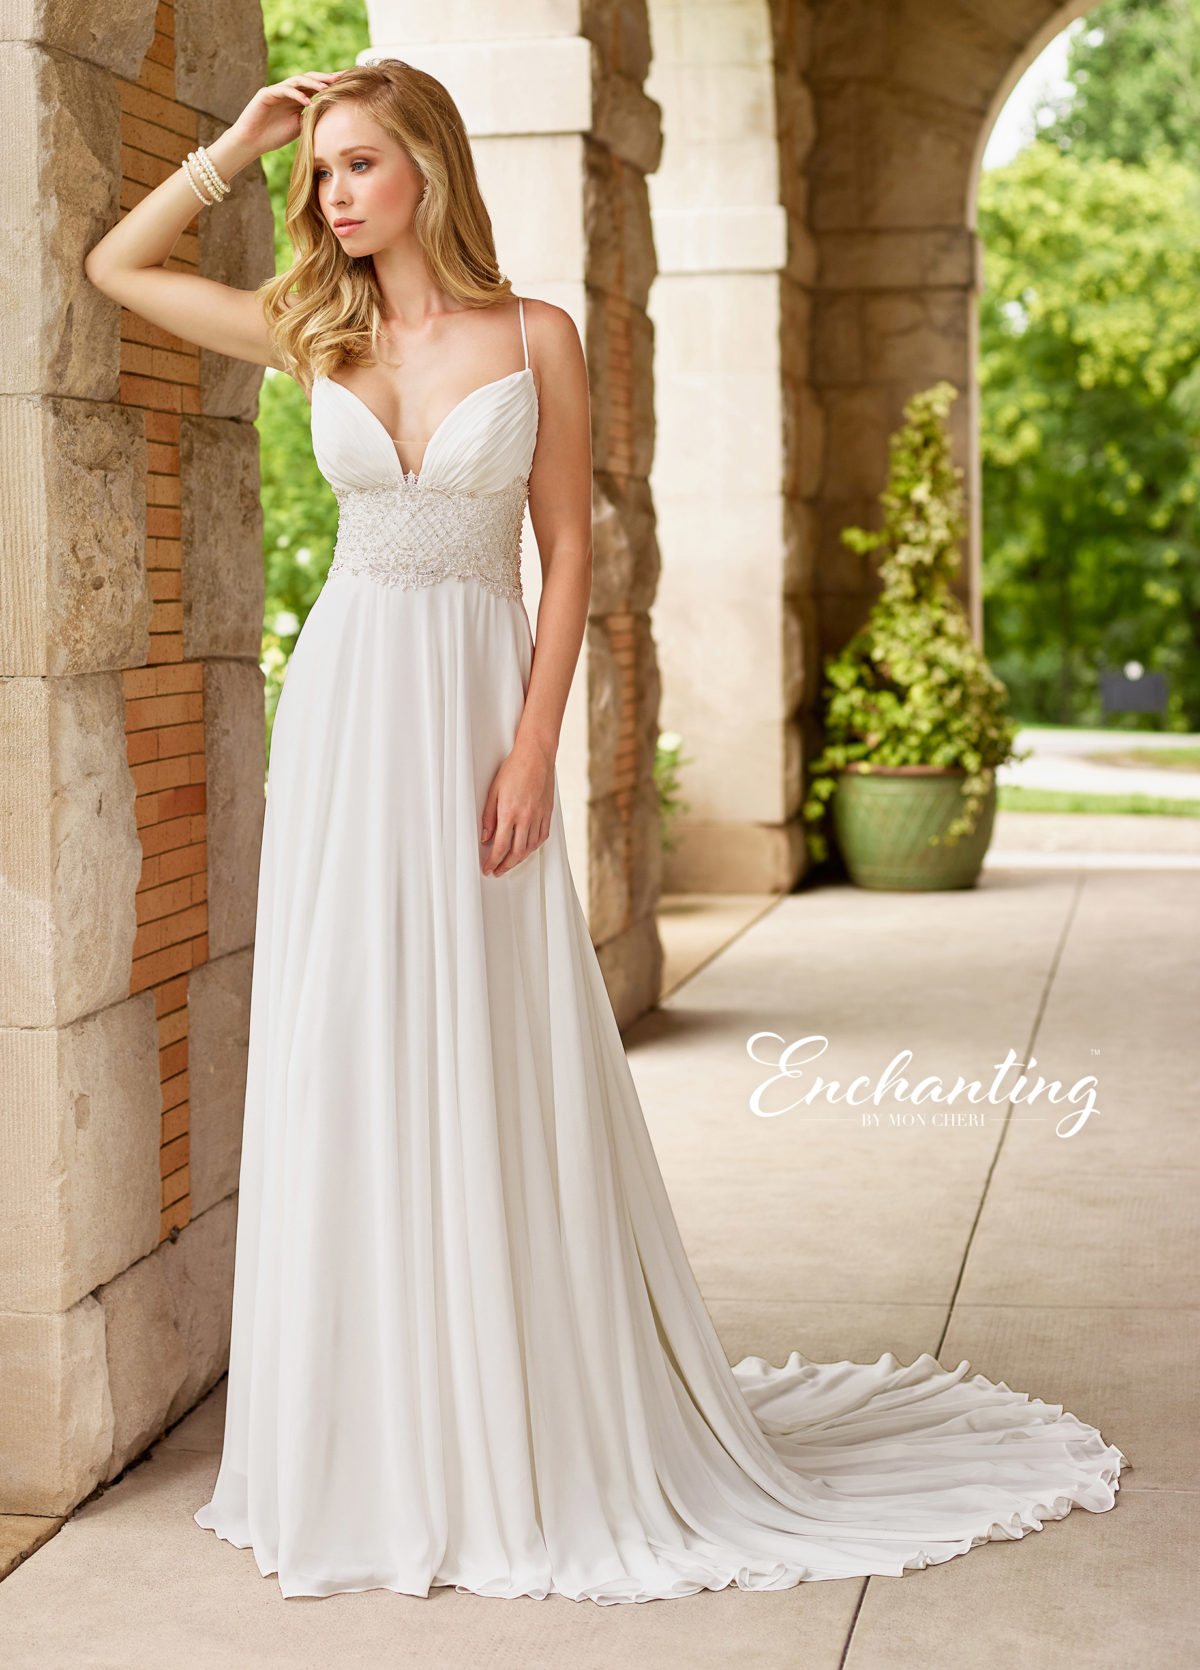 beach-wedding-dress-Enchanting-118146_A